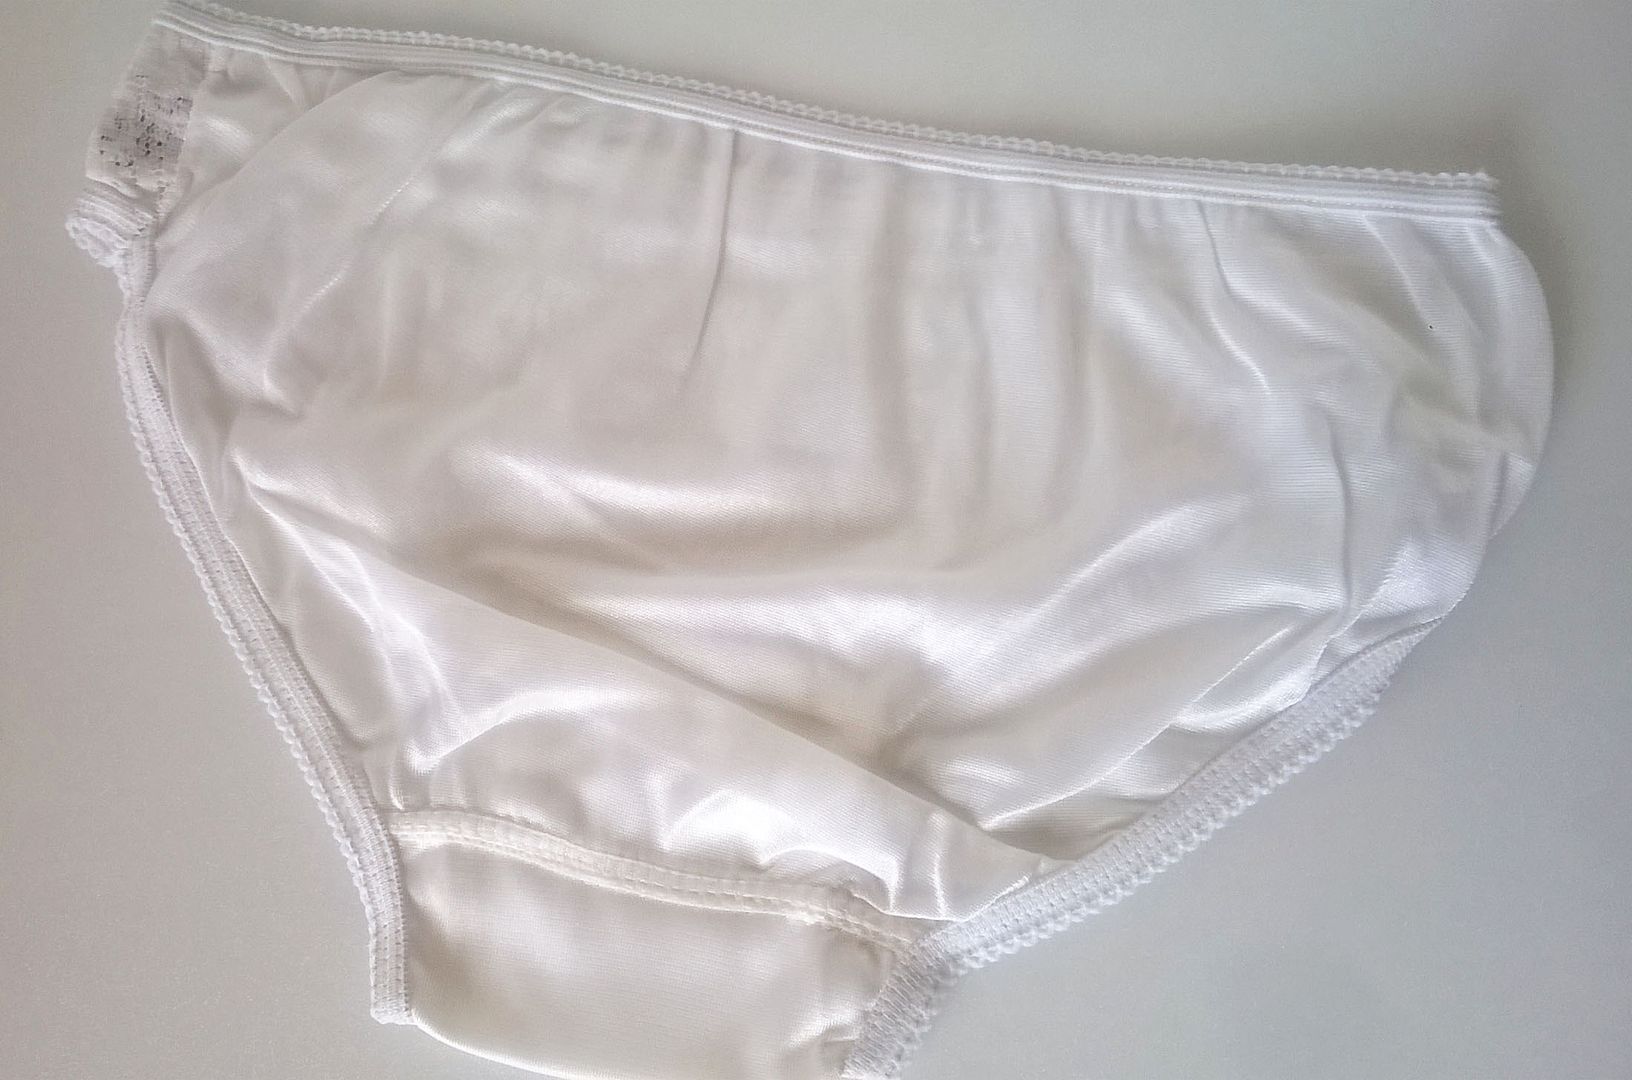 1960s Silky Vintage White Nylon Lace Panties Knickers Ladiesteen